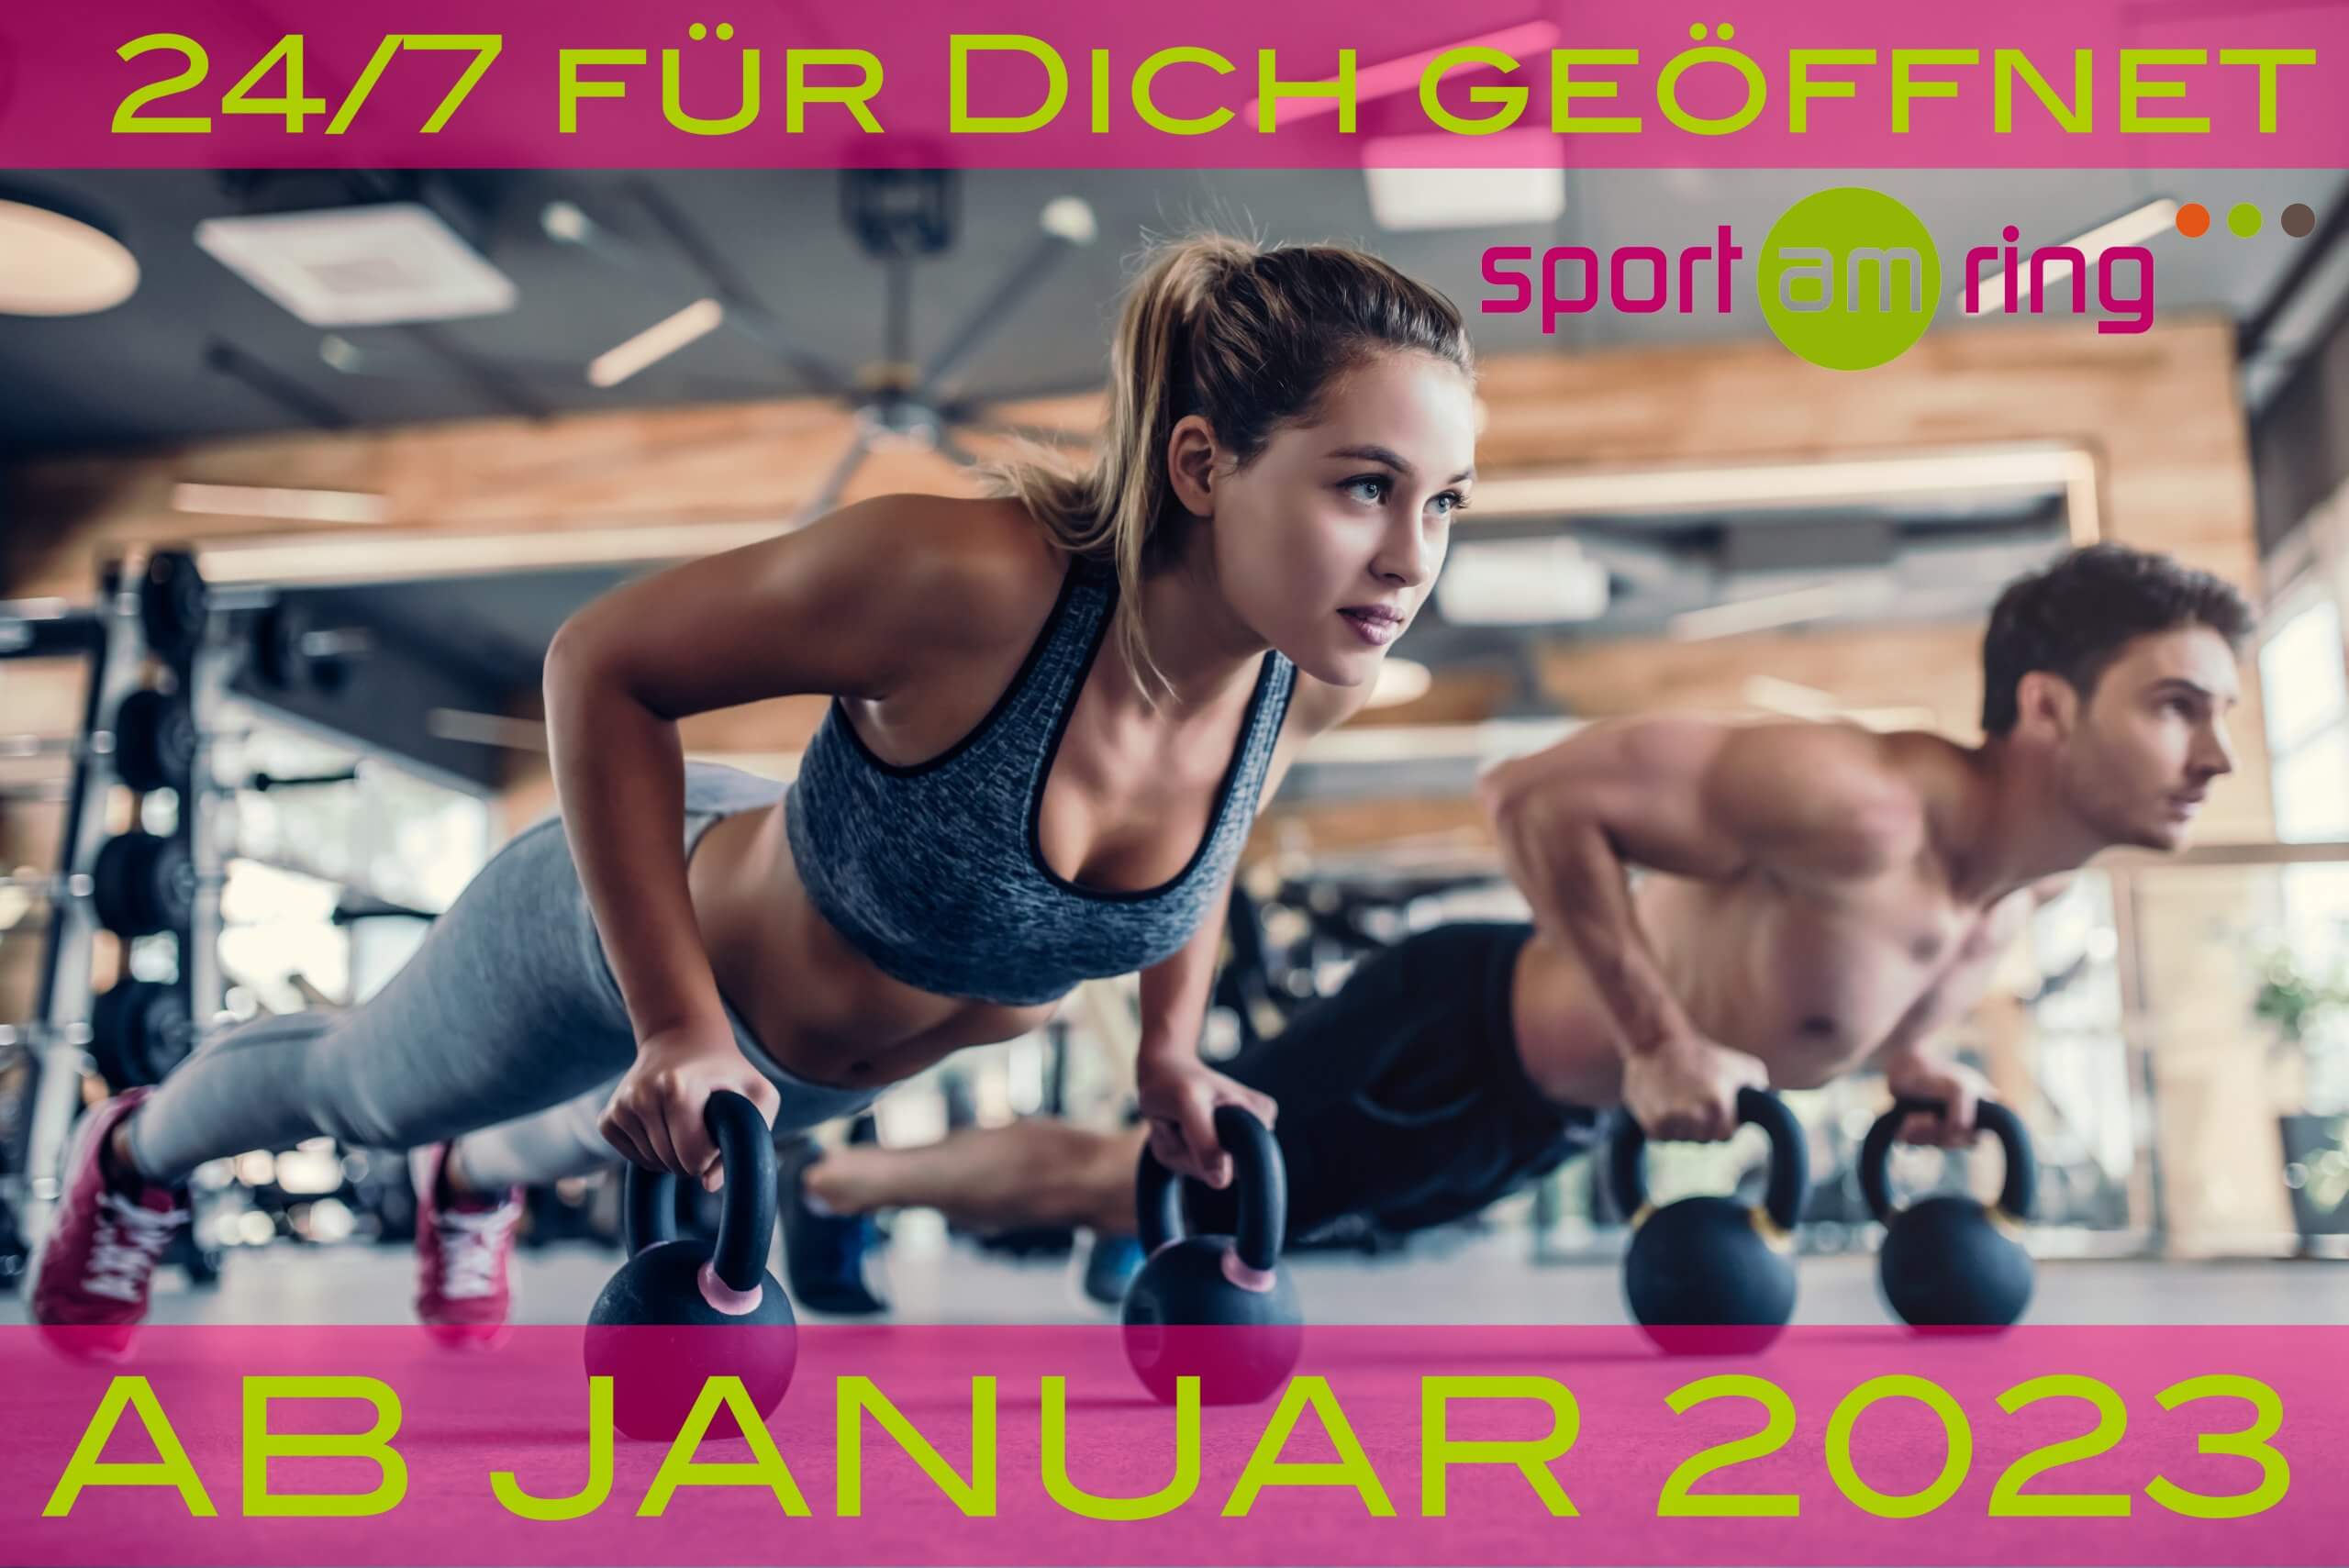 Sport am Ring 24/7 für Dich geöffnet ab Januar 2023